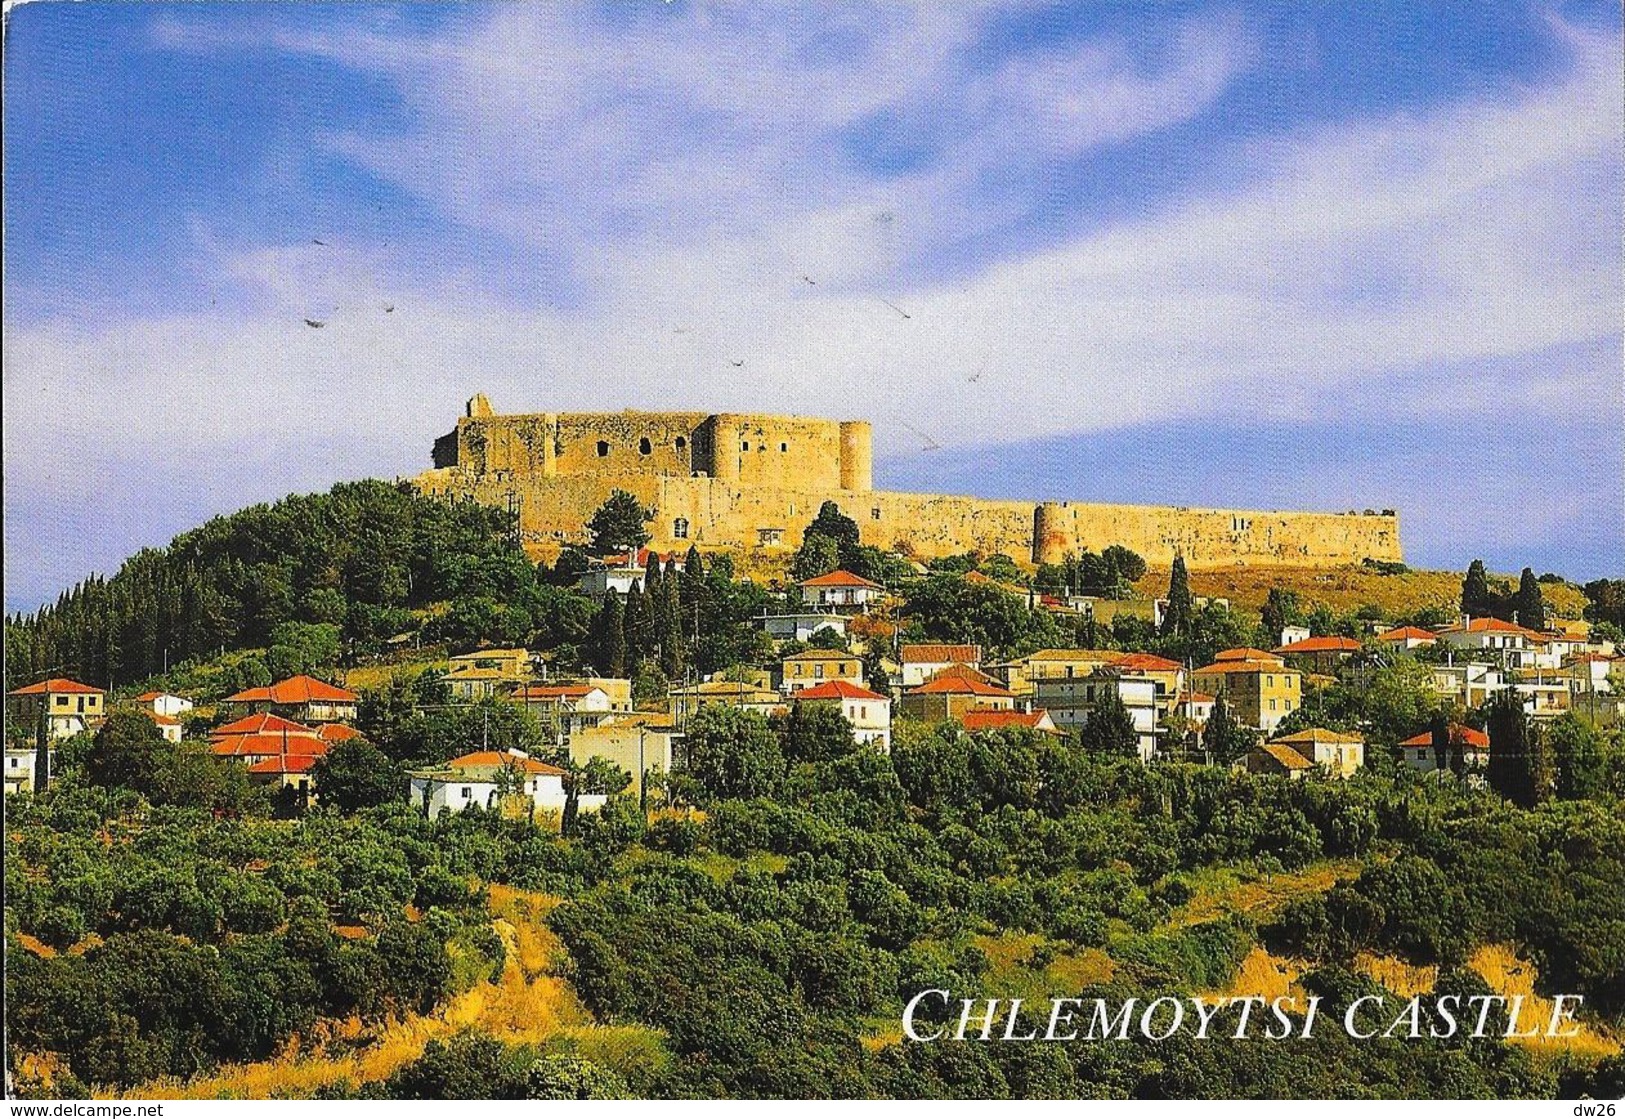 Grèce - Killini - Chlemoytsi (Chlemoutsi) Castle - Editions Haitalis - Griechenland